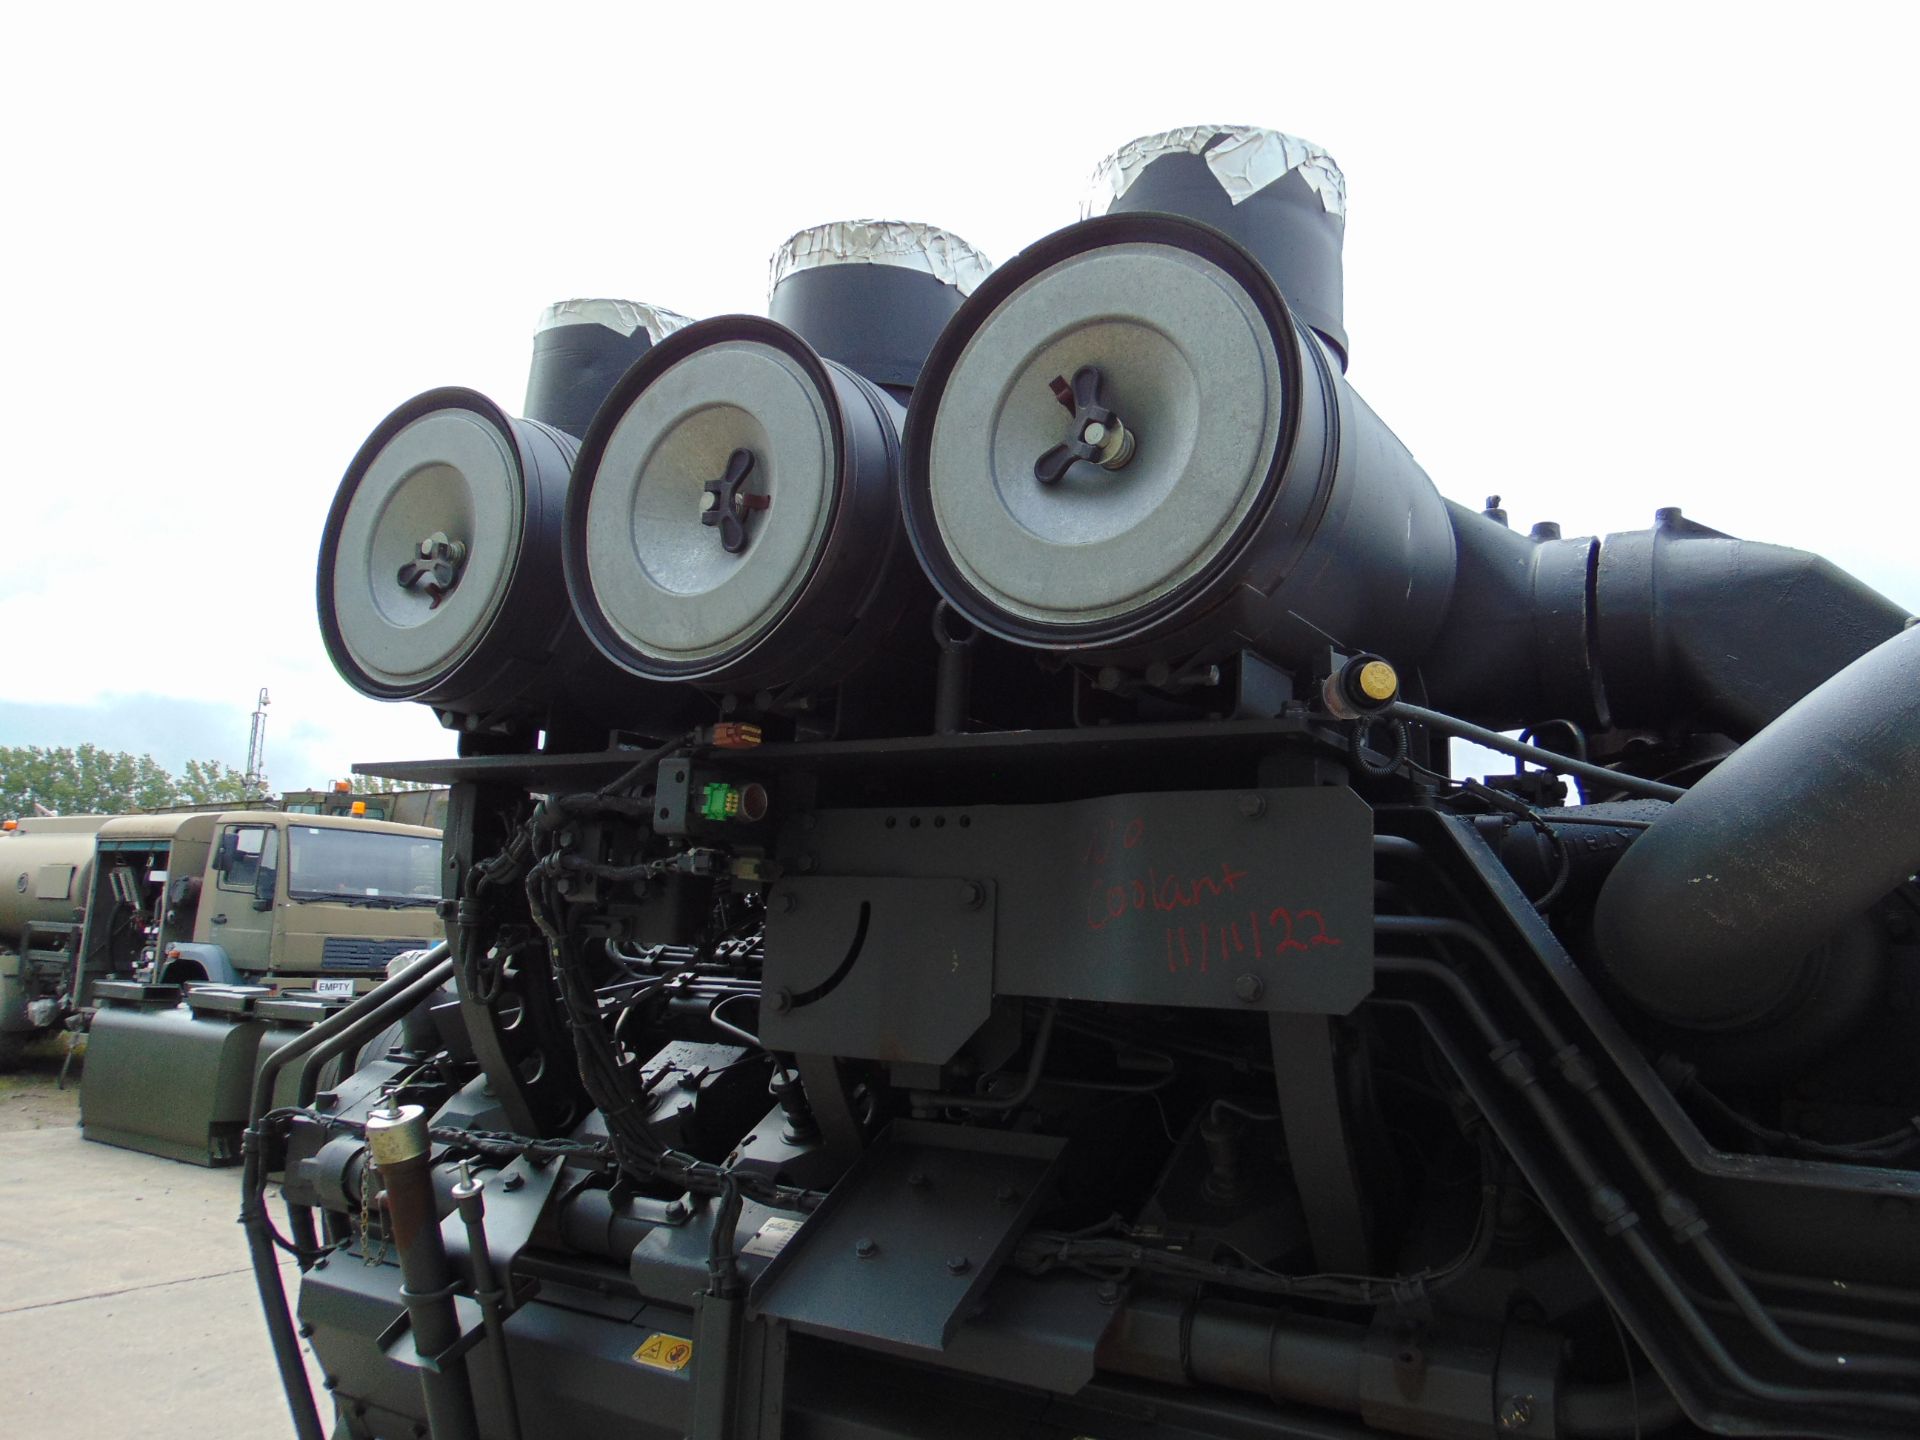 Factory Reconditioned Komatsu SA12V170E-2 V12 Turbo Diesel Engine Suits Komatsu D575A Bulldozer - Image 21 of 29